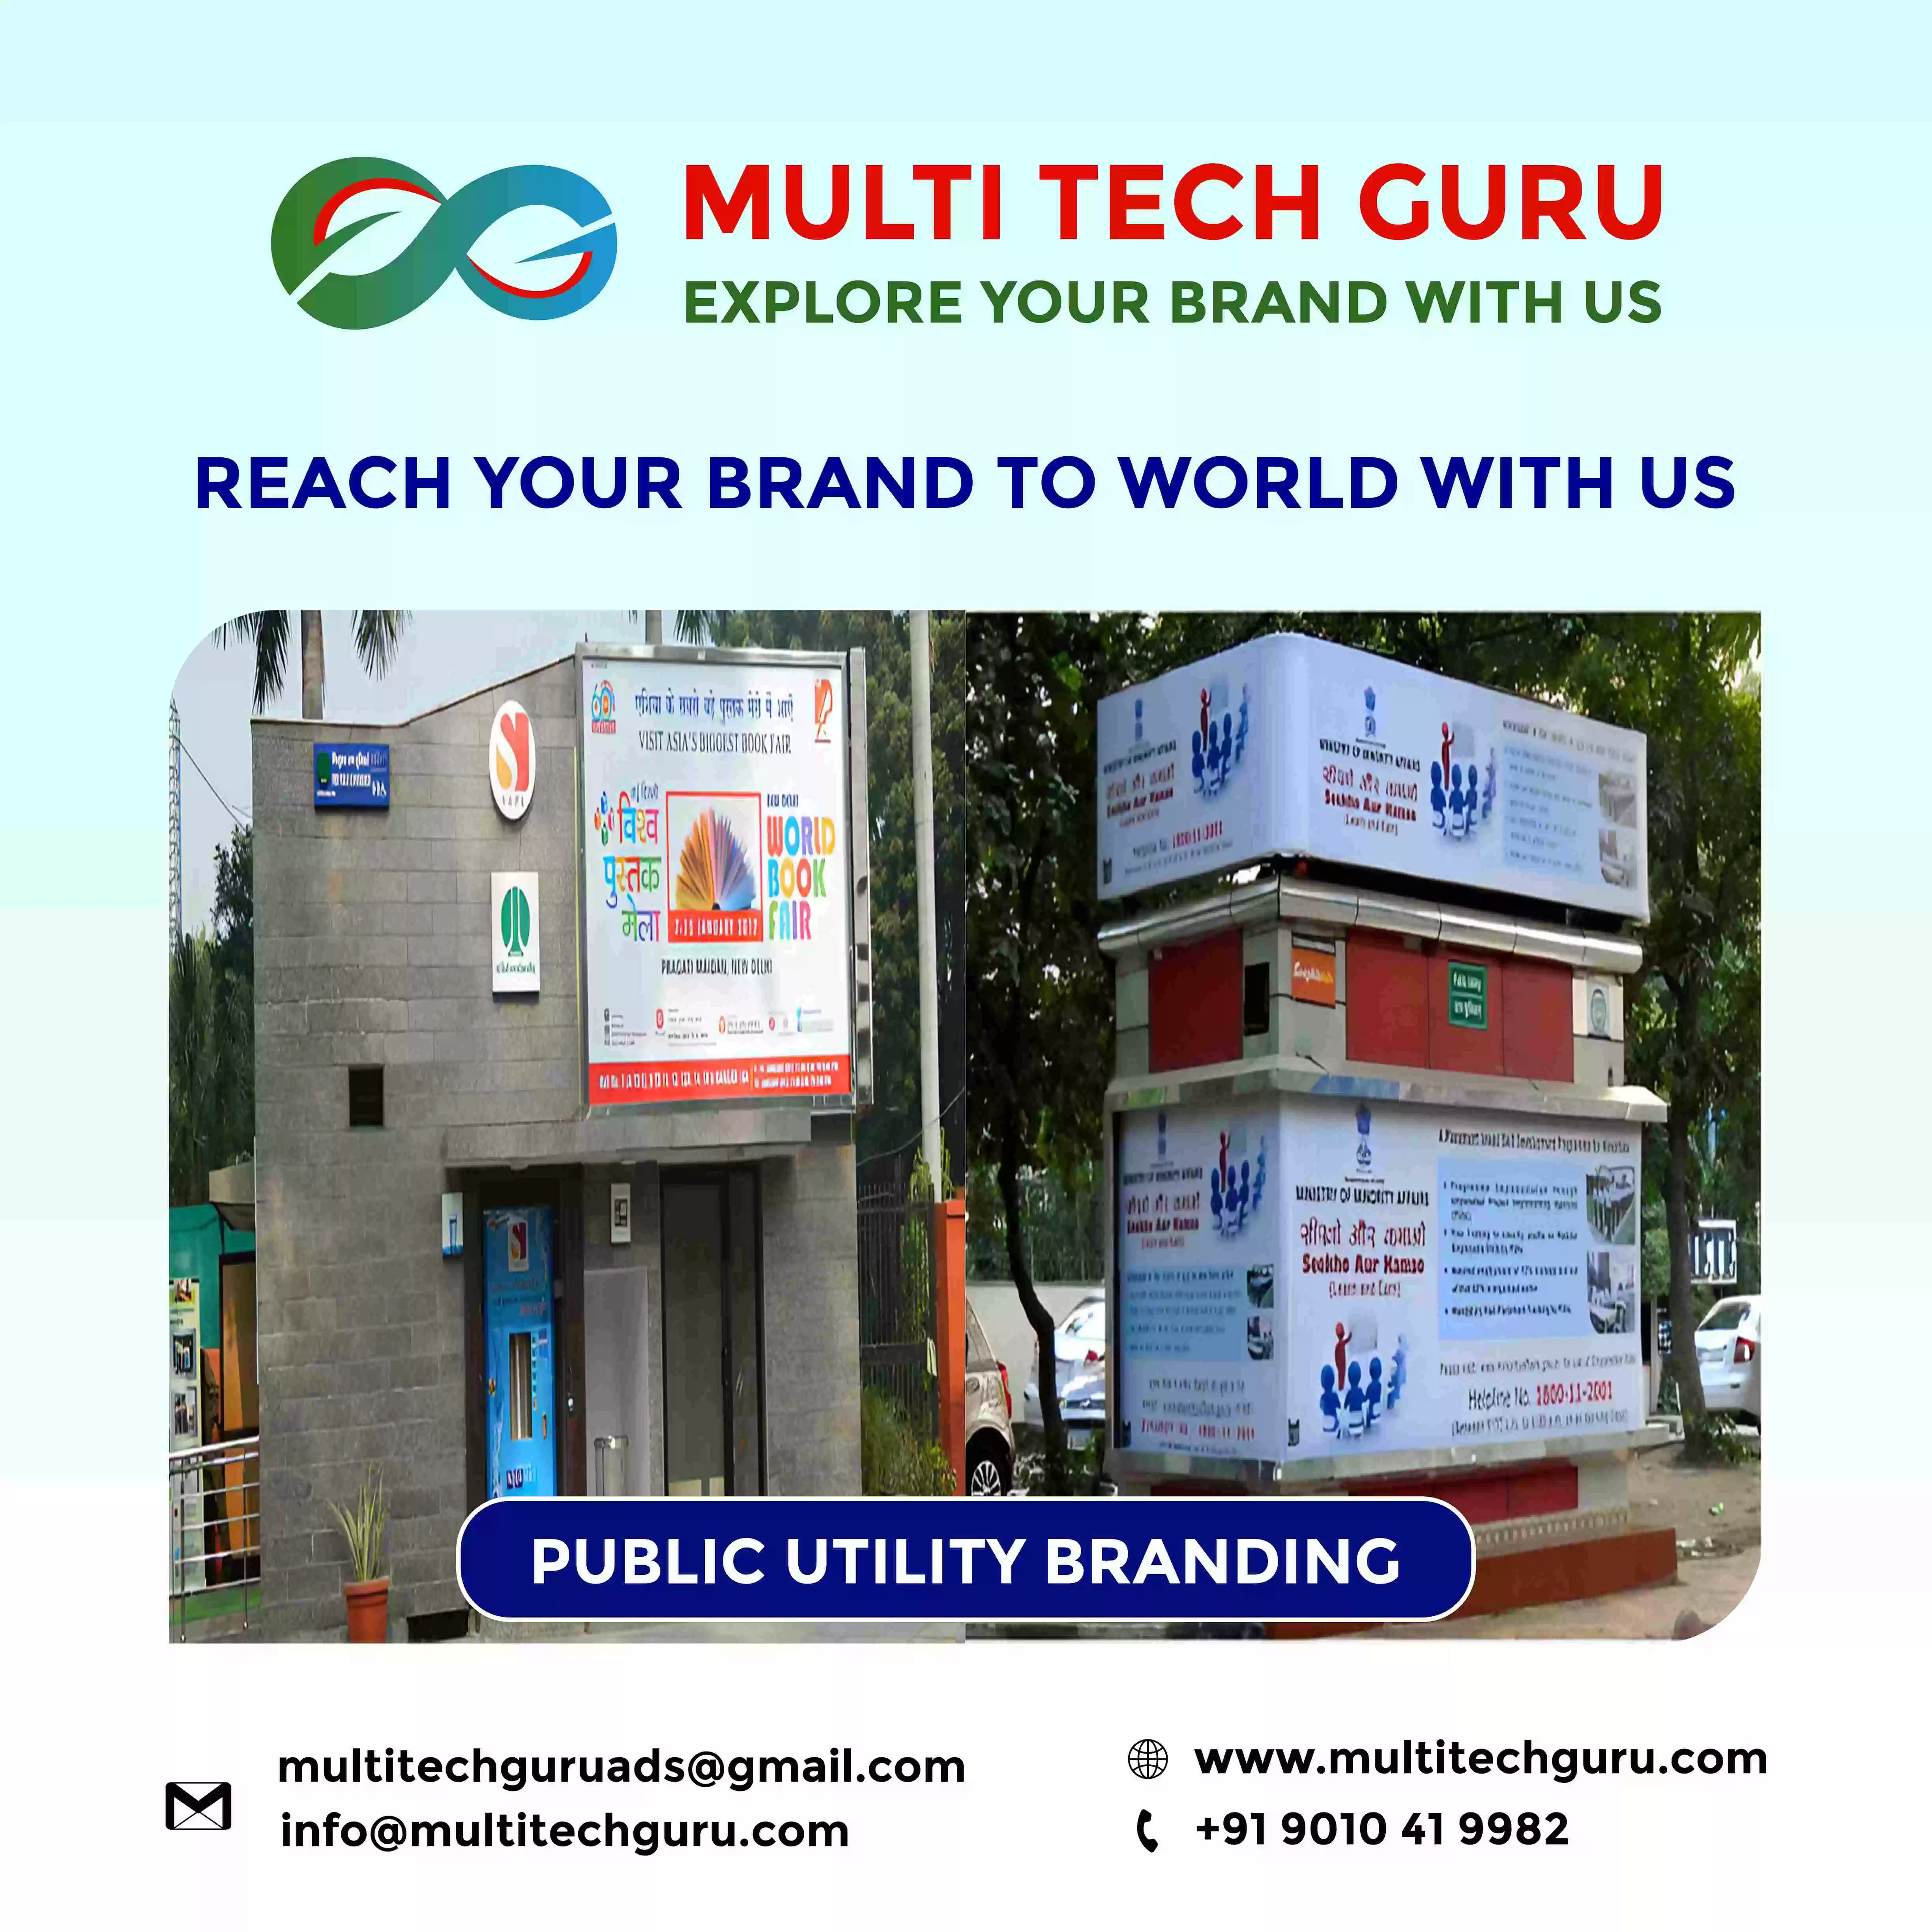 PUBLIC UTILITY Branding - advertising-marketing-Multitechguru.com-9010419982-Outdoor media advertising - Print Media Services